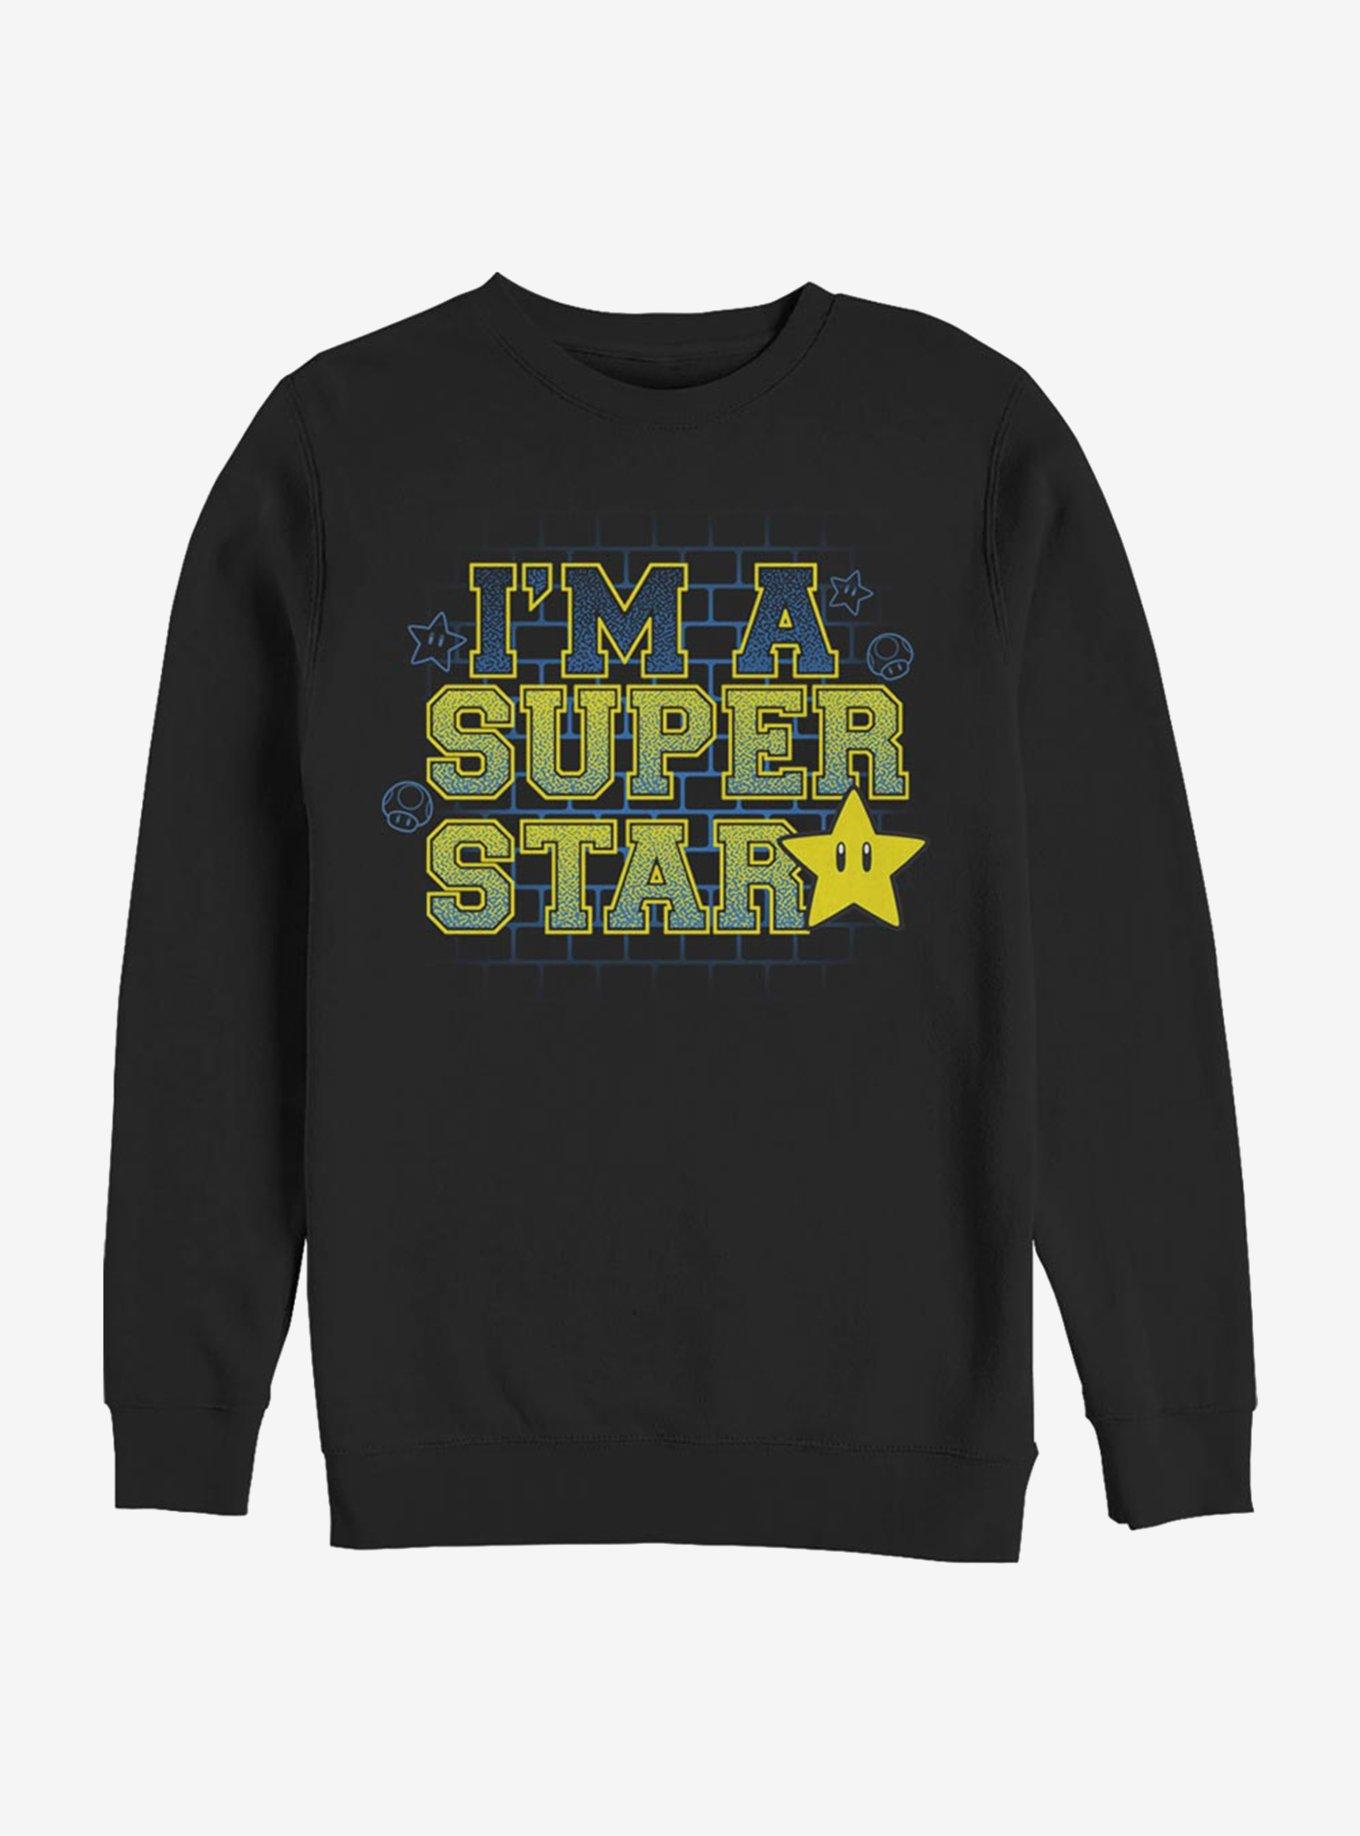 Super Mario Star Crew Sweatshirt